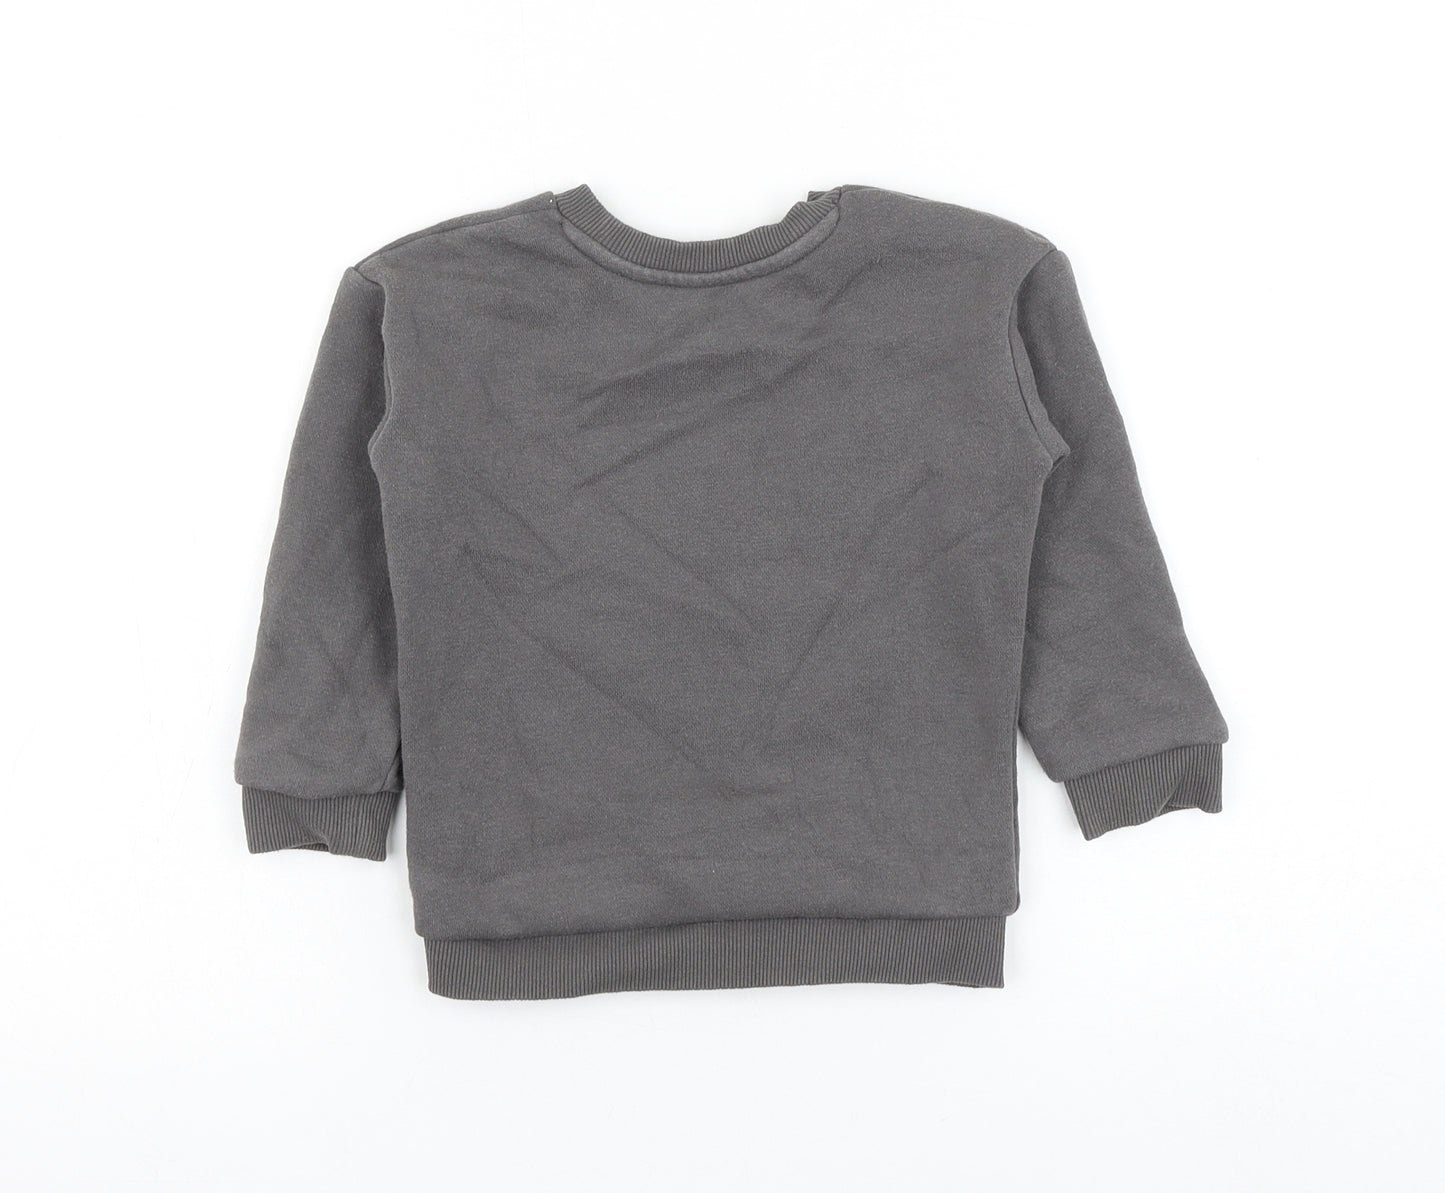 Primark Boys Grey Cotton Pullover Sweatshirt Size 2-3 Years Pullover - Batman